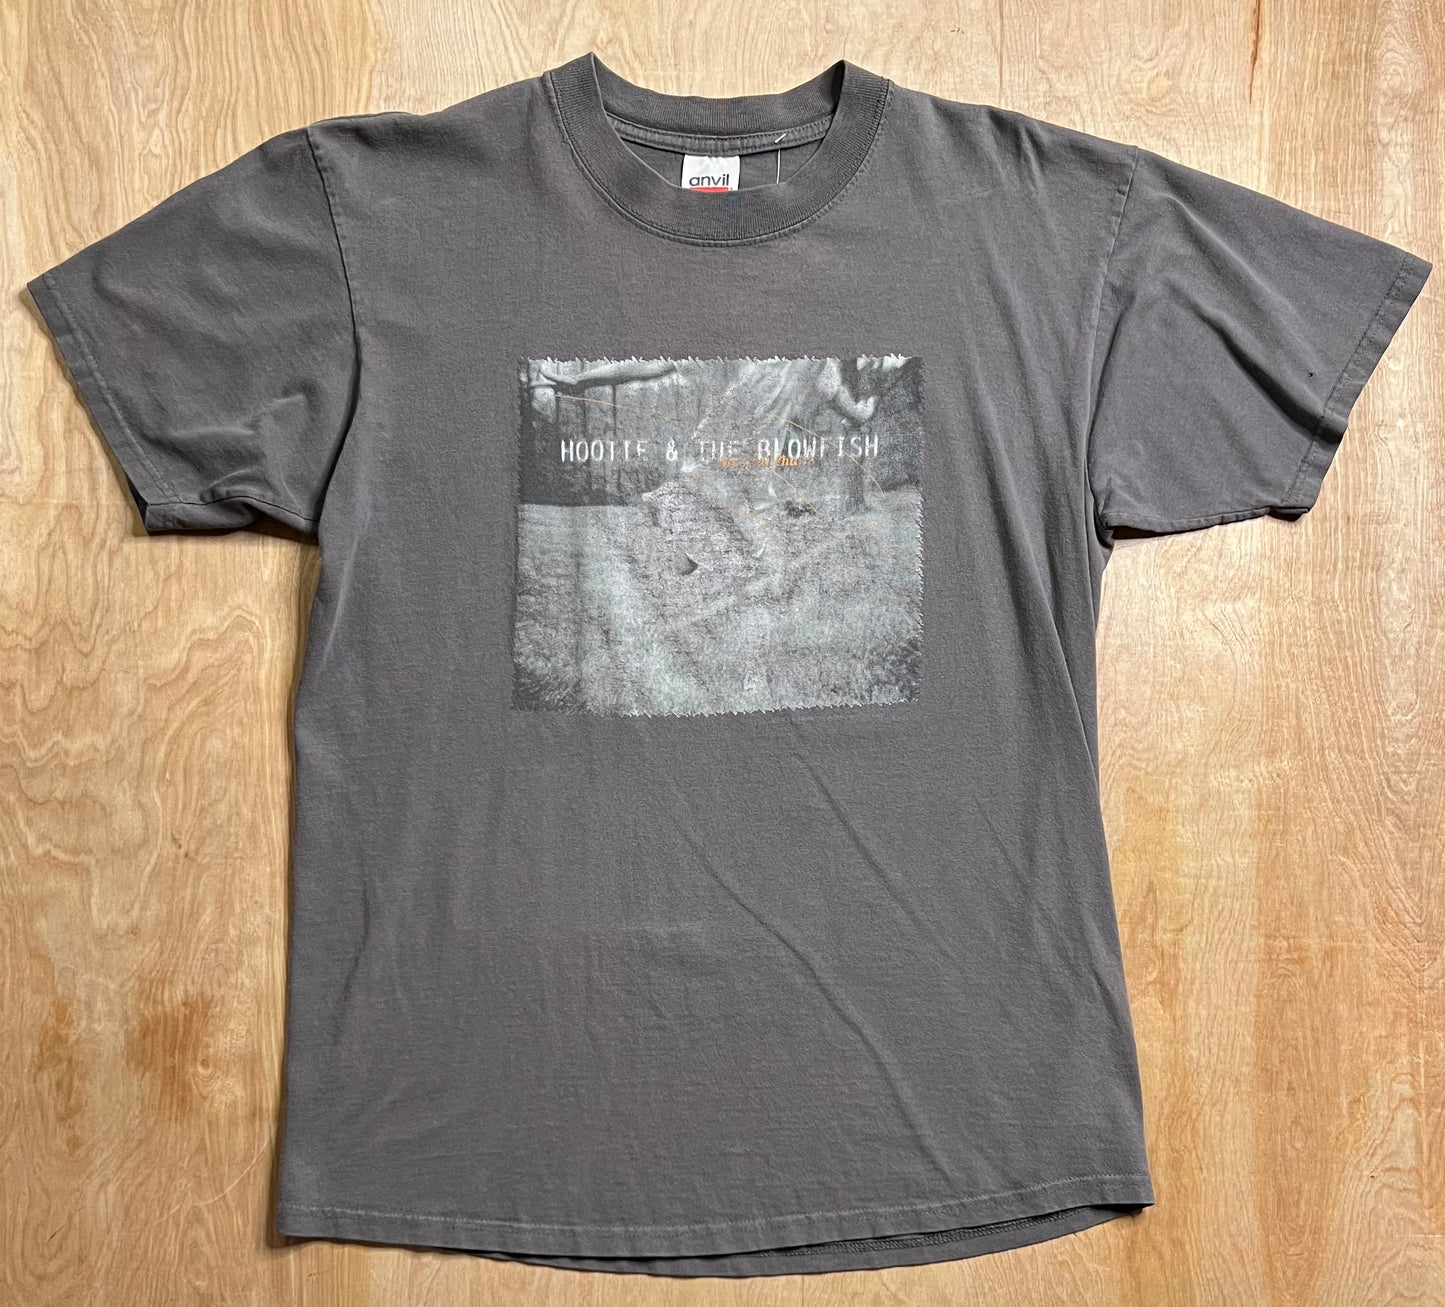 1999 Hootie & the Blowfish World Tour T-Shirt